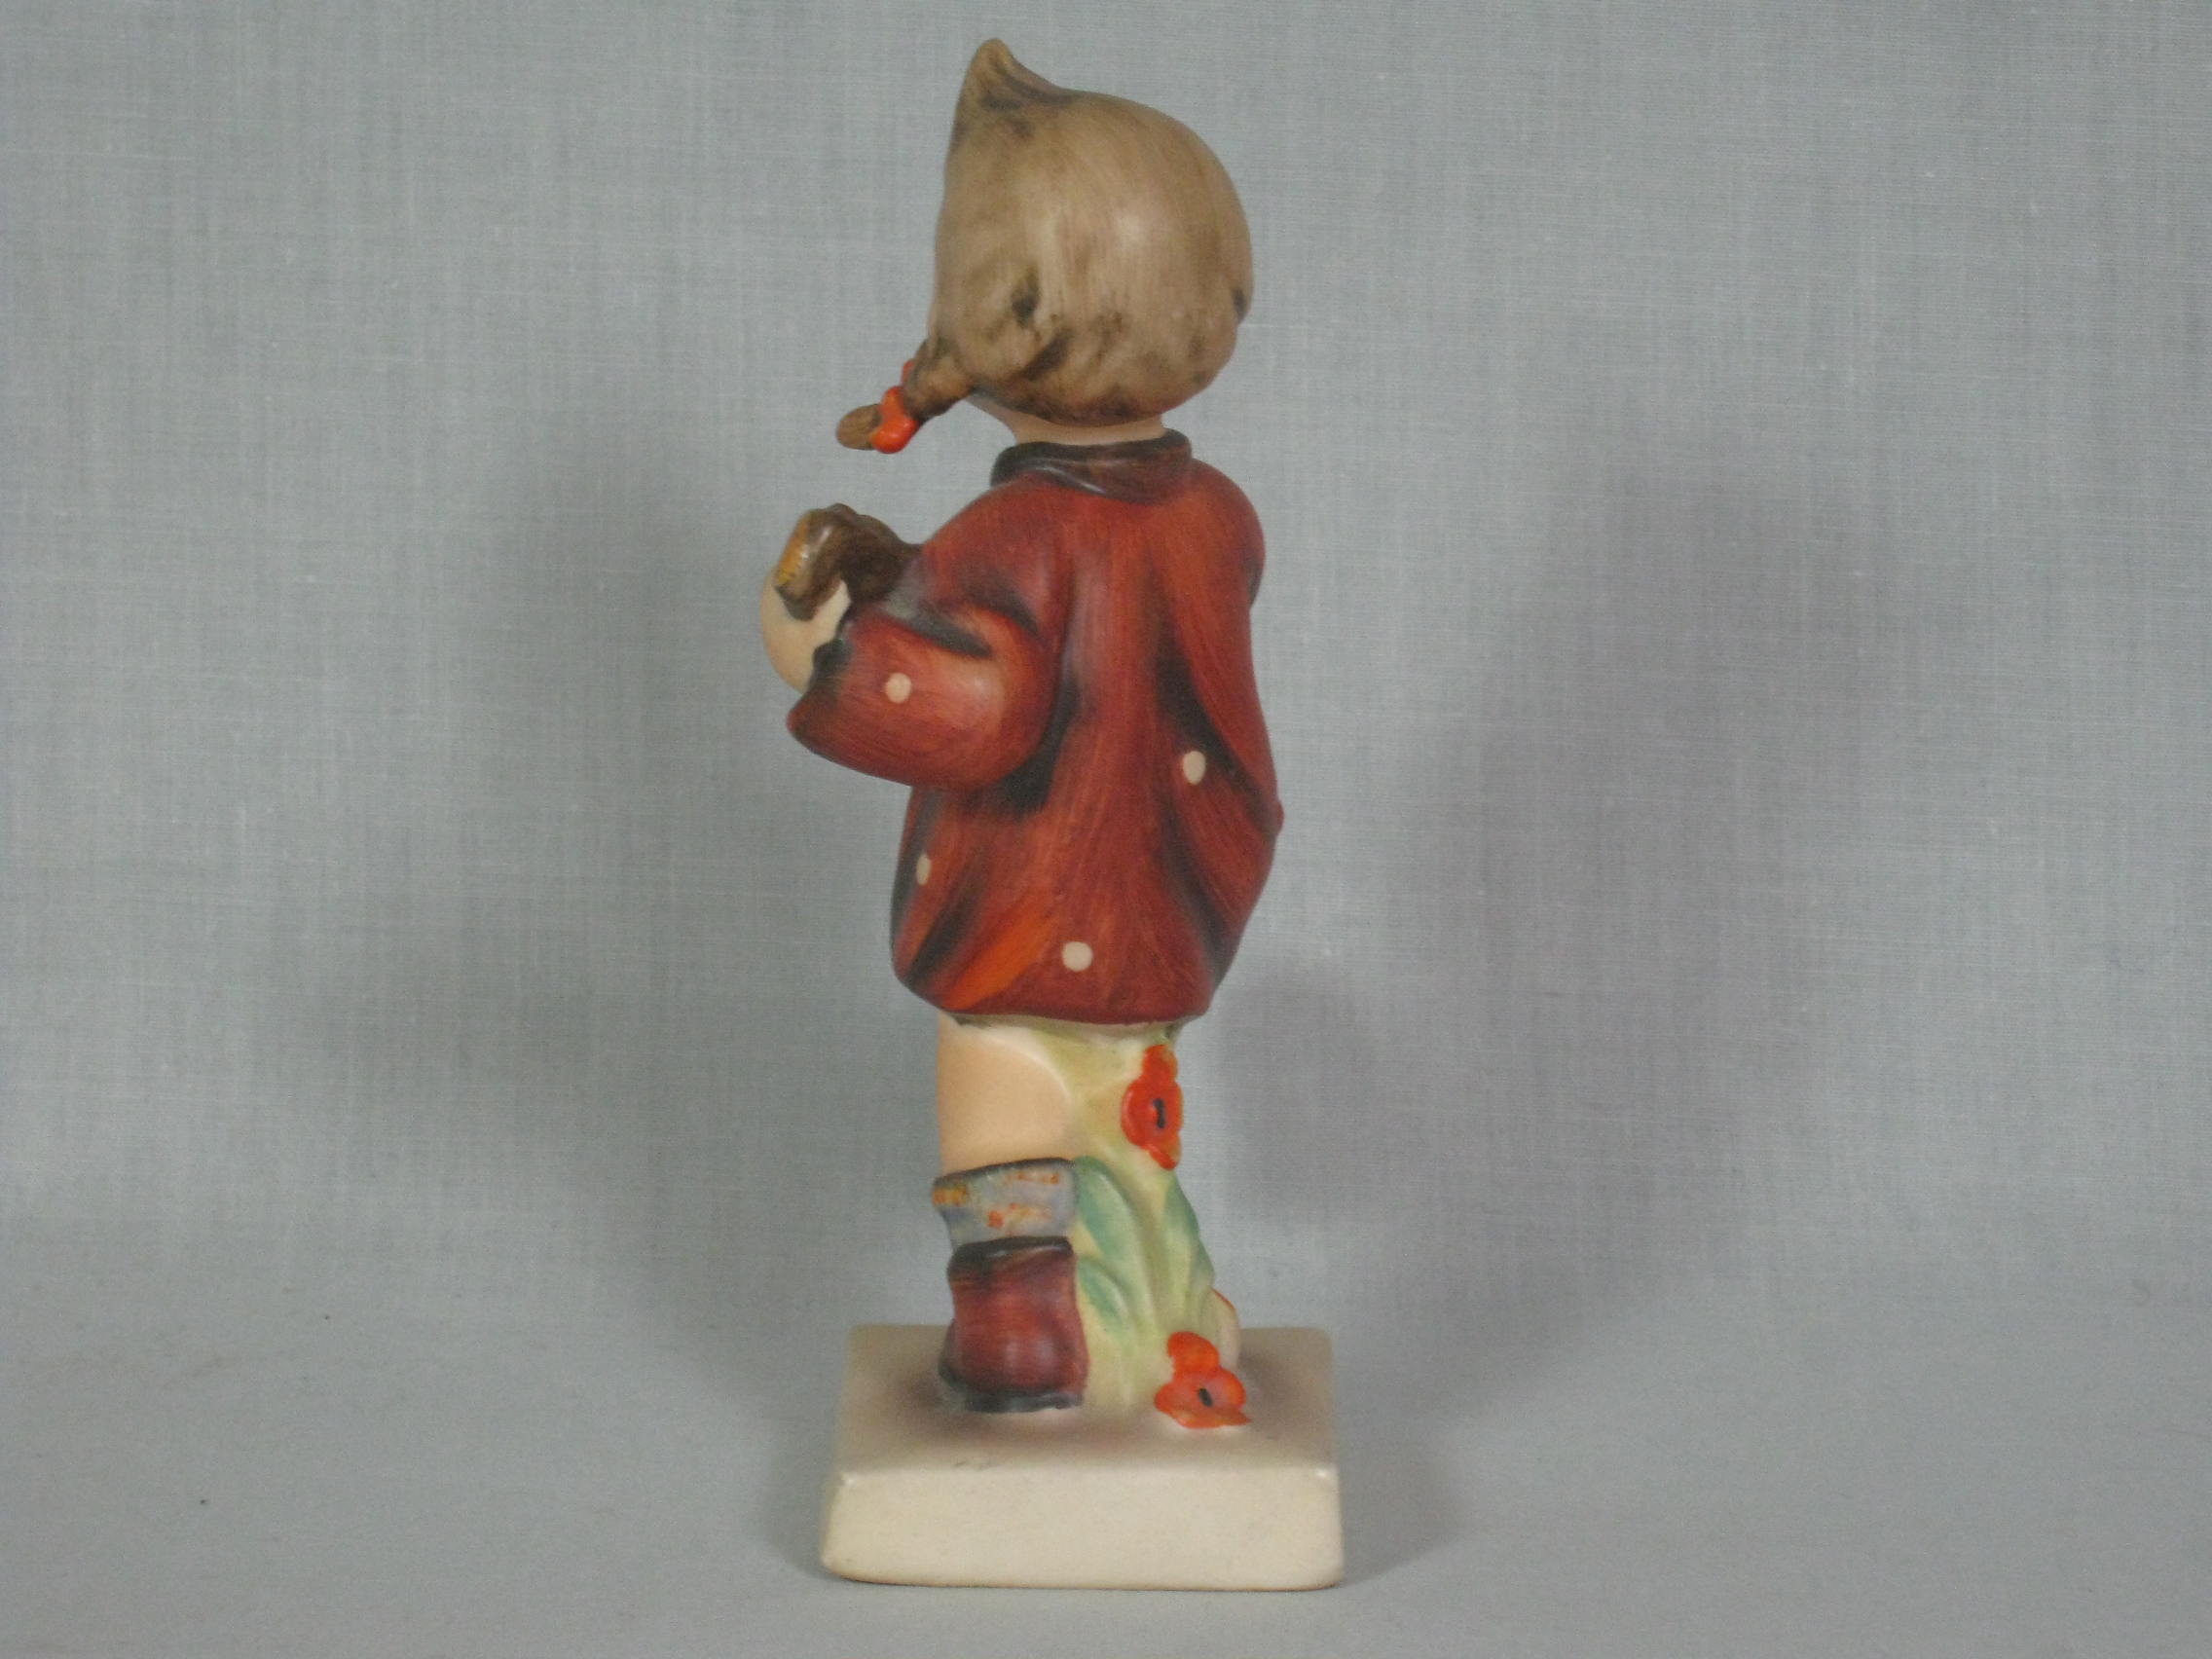 Vintage Hummel Figurine Happiness 86 TMK-2 Girl With Banjo Full Bee Mark Germany 3